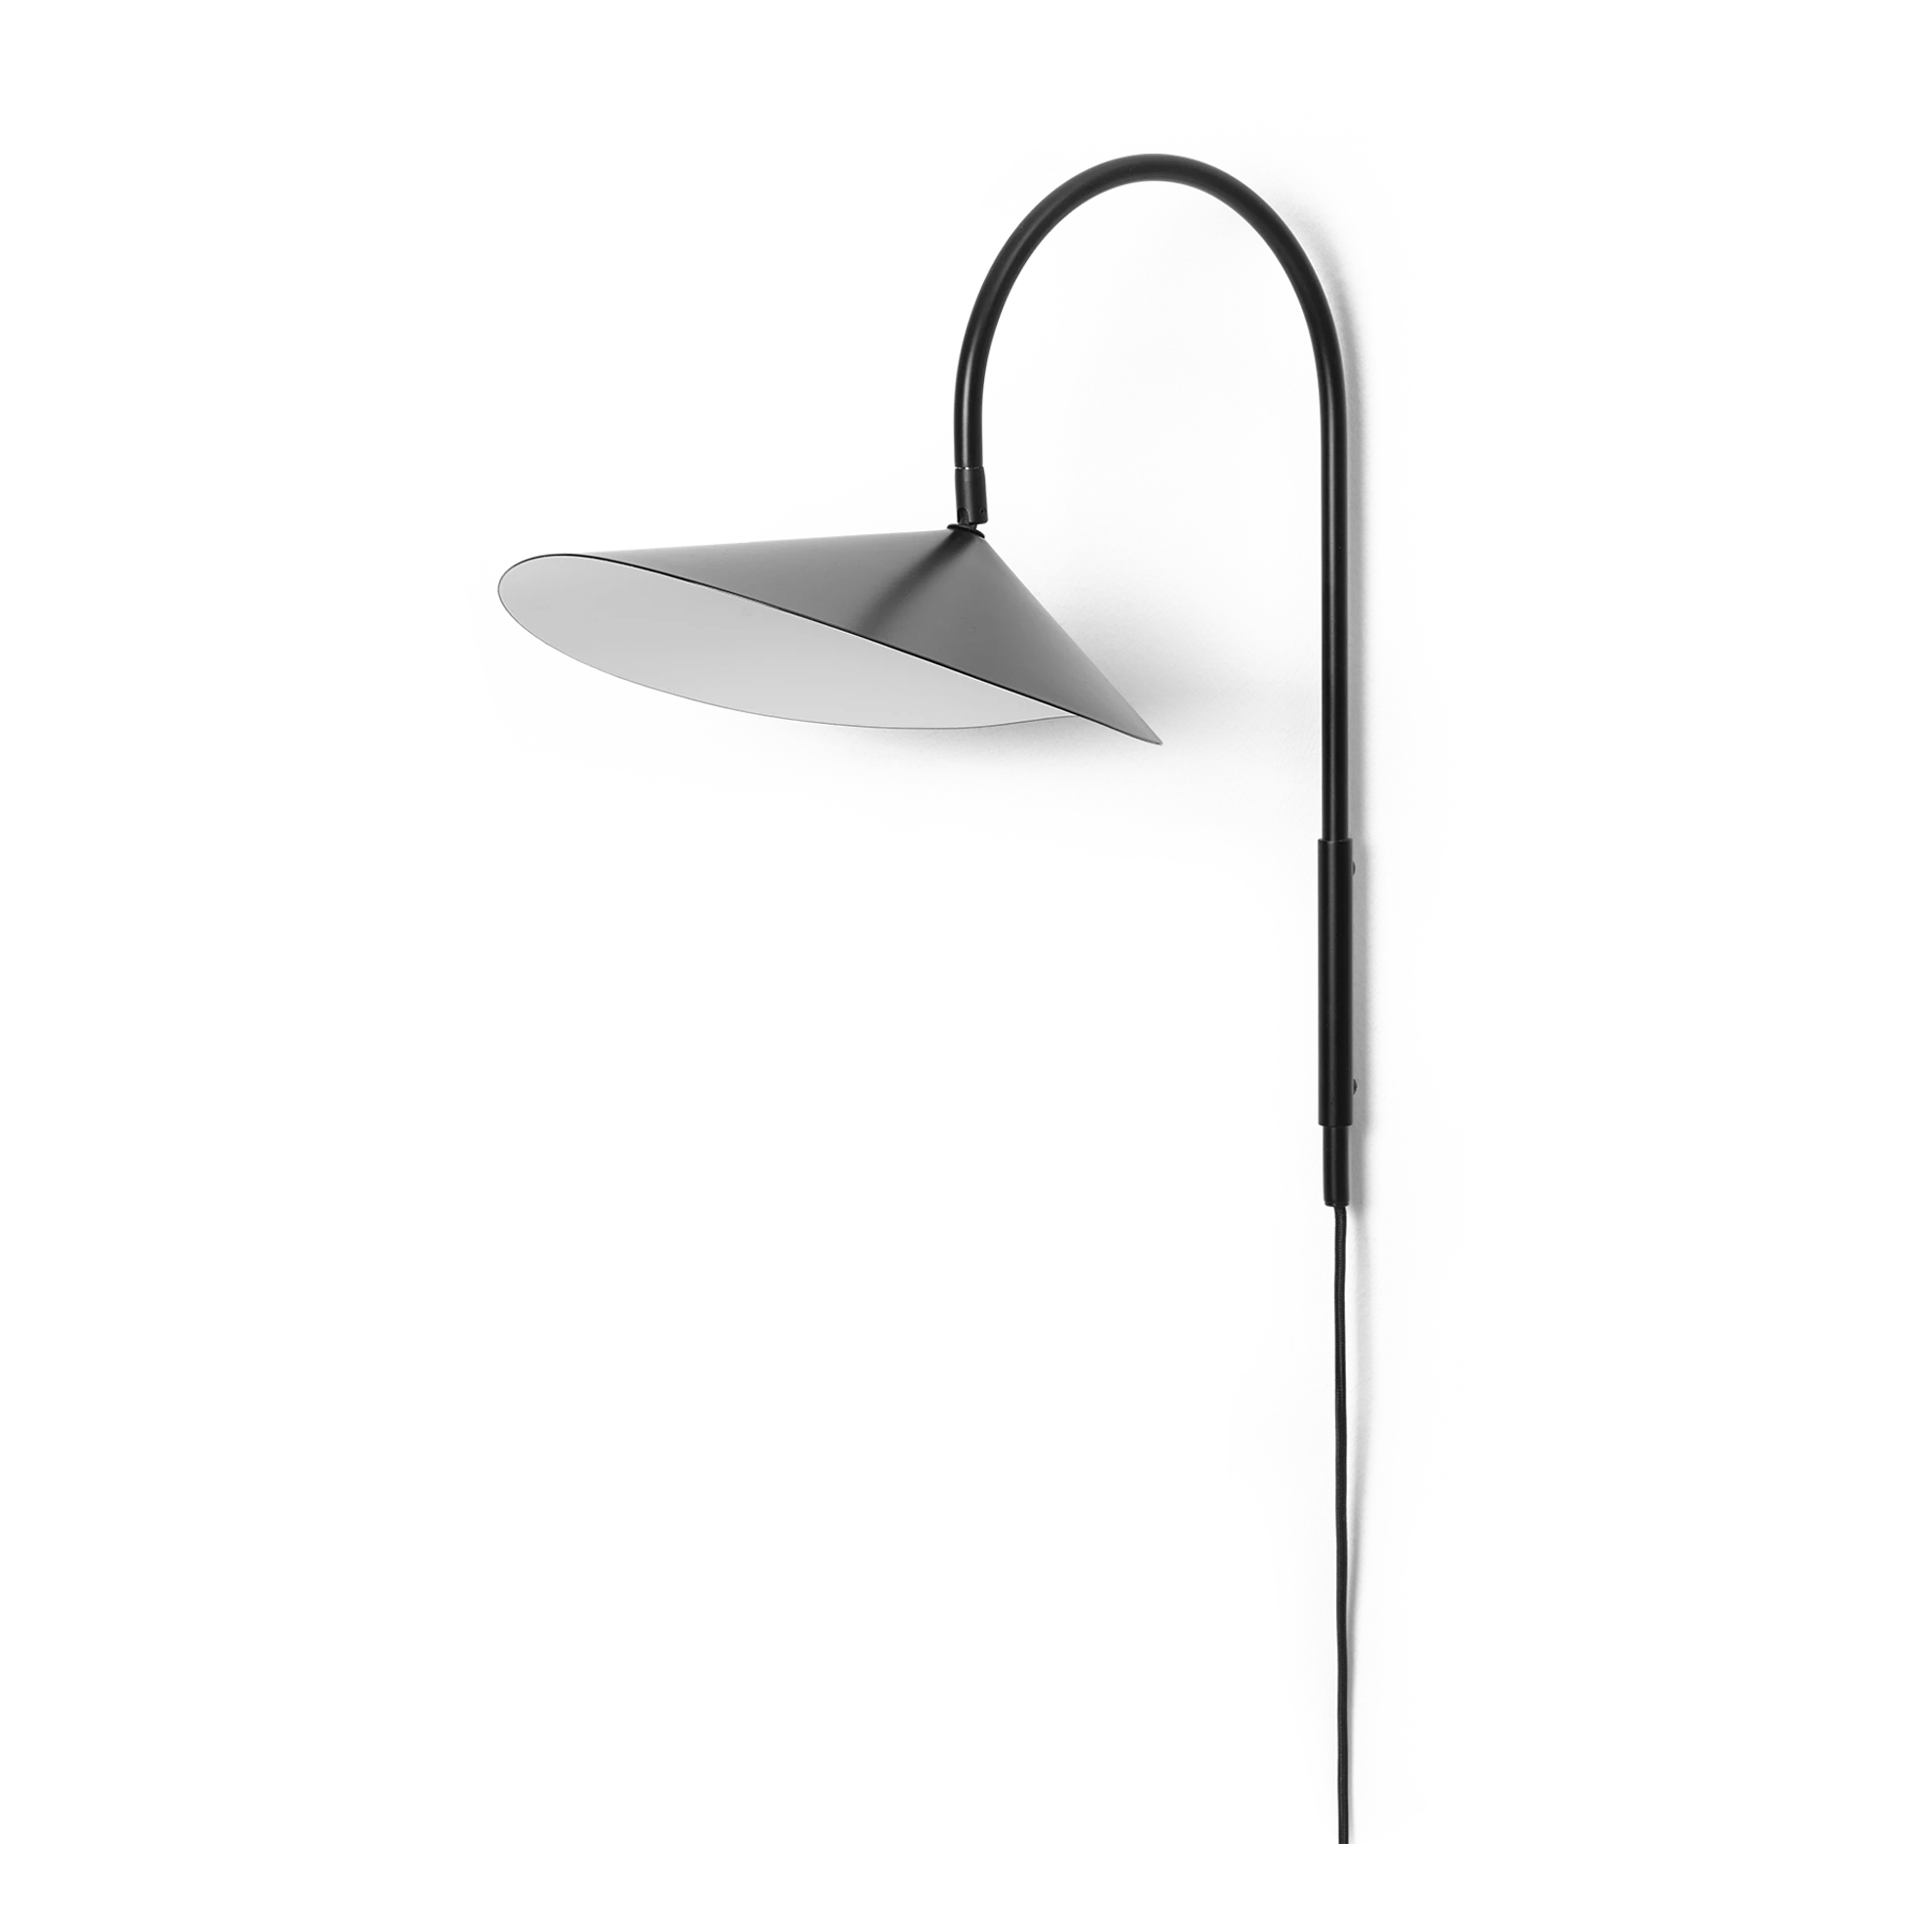 Arum Swivel Wall Lamp | Black | by ferm Living - Lifestory